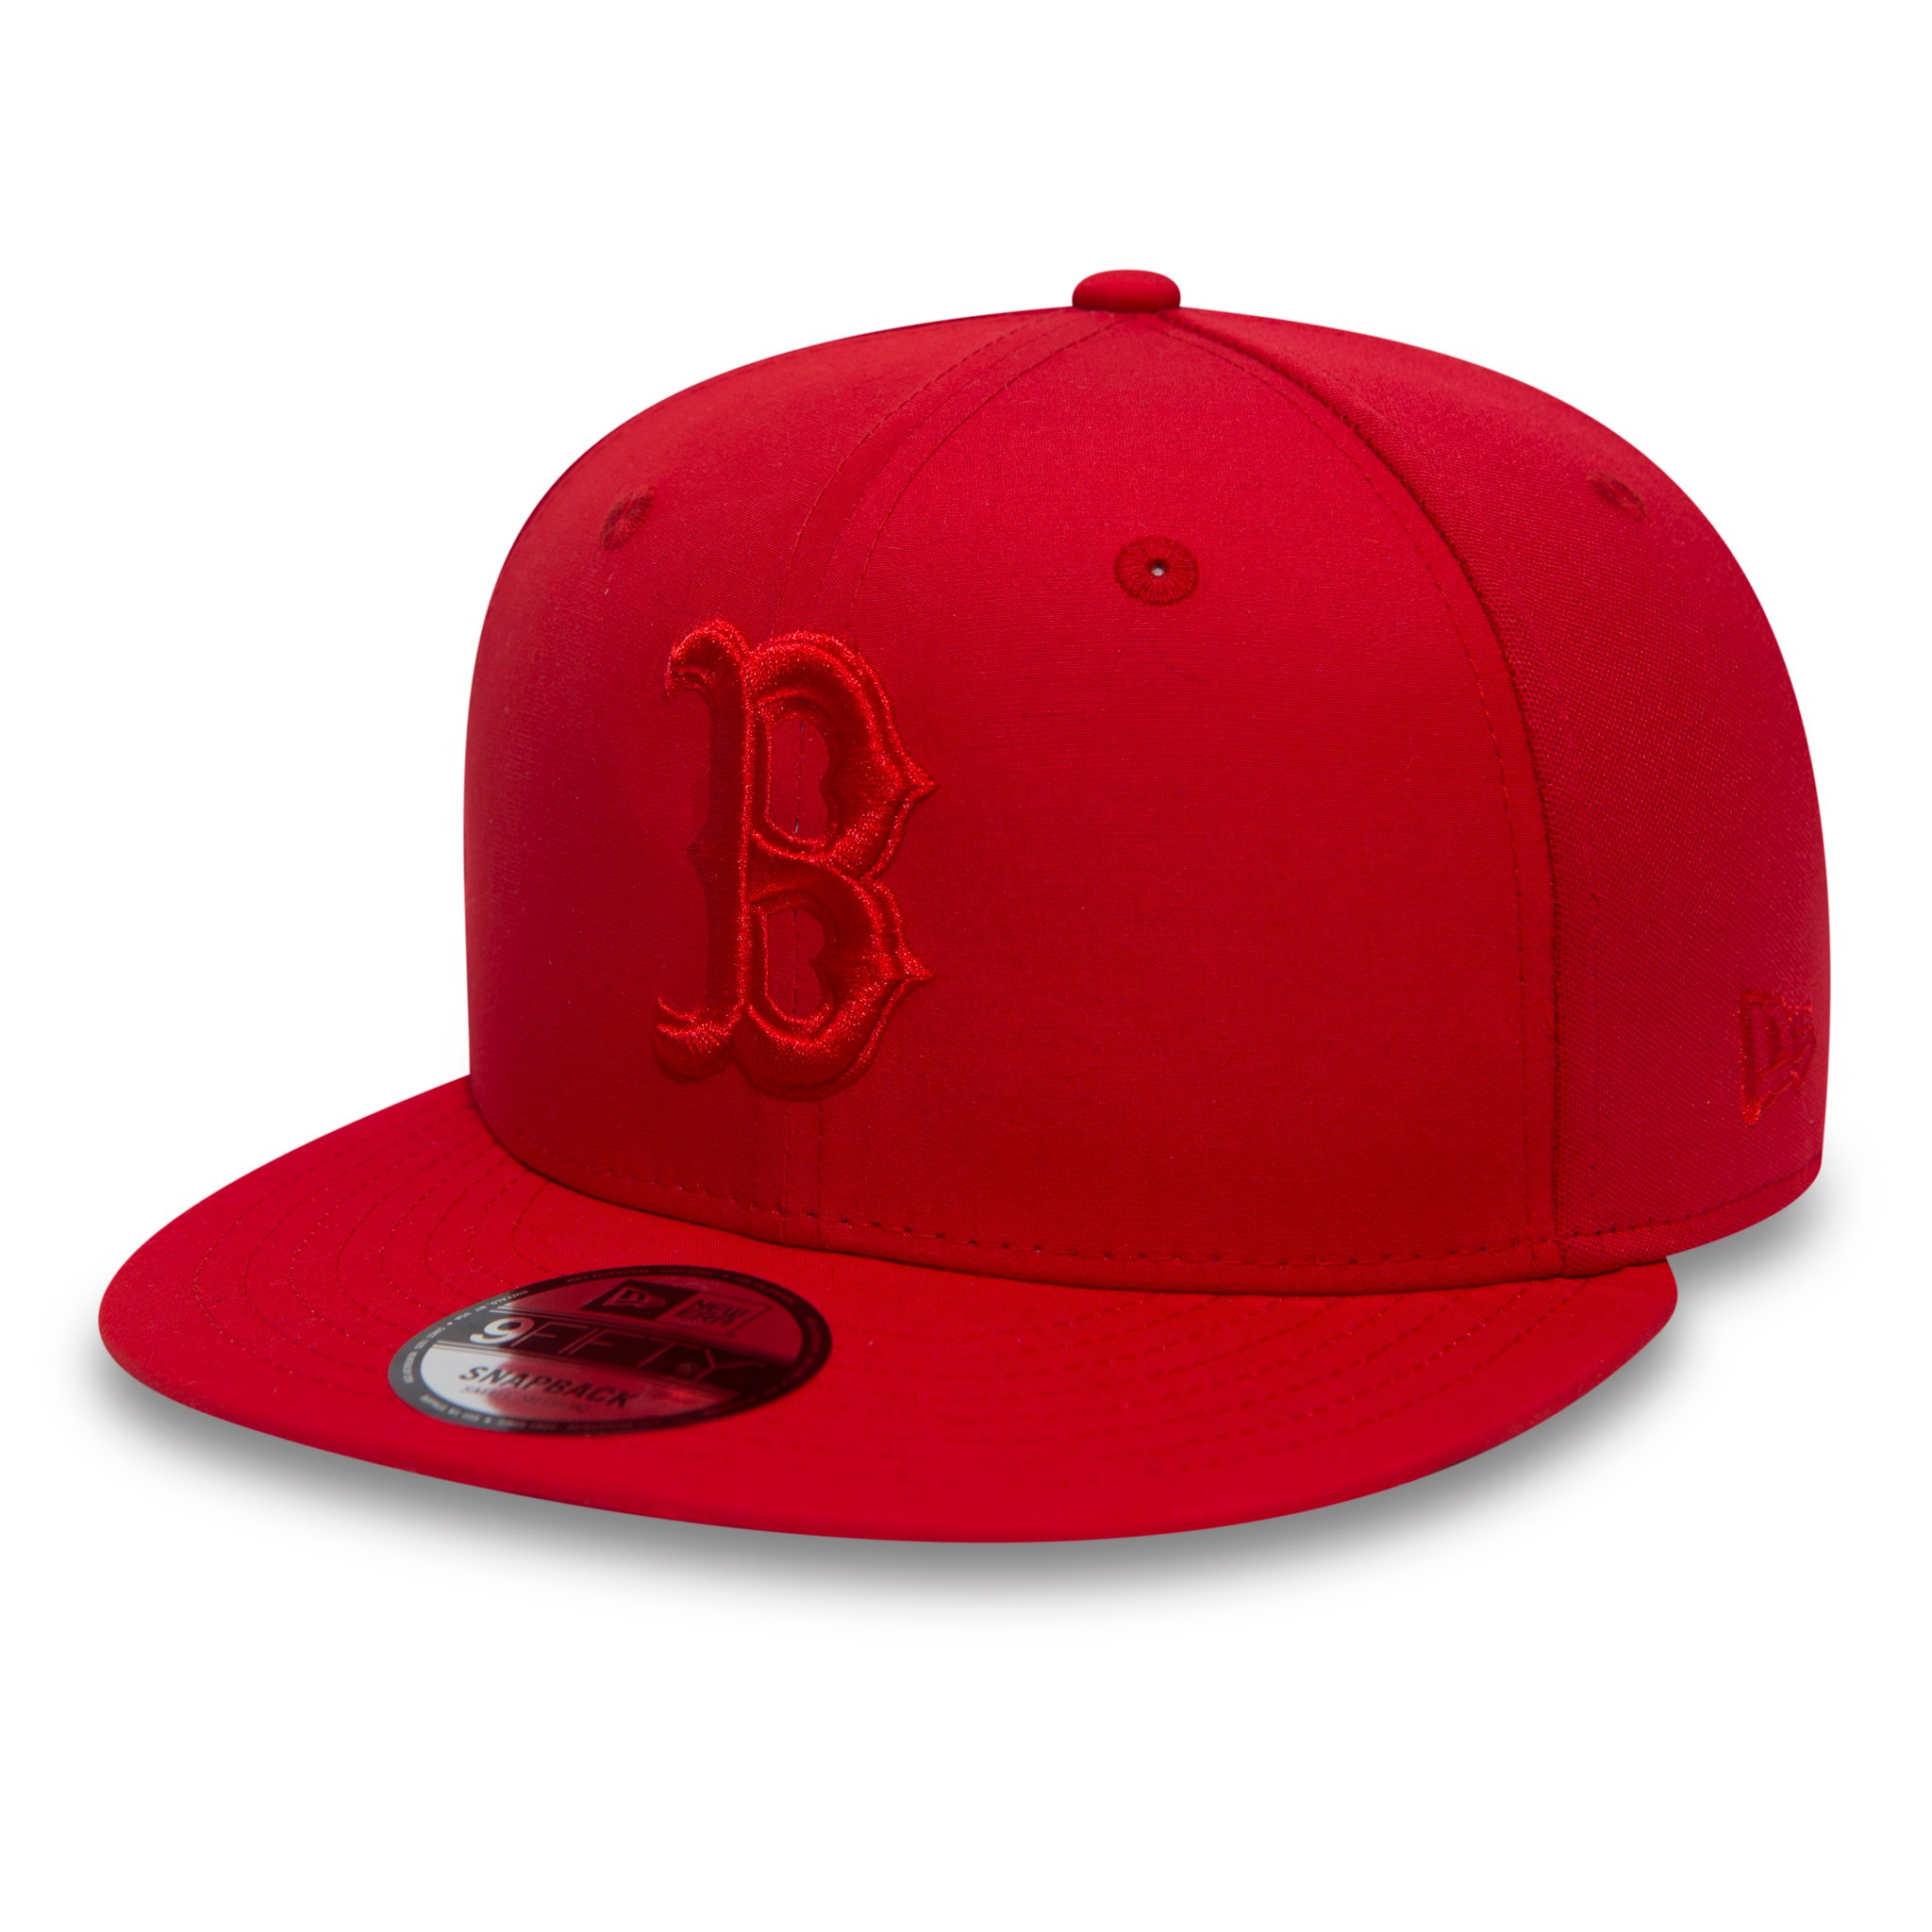 Gorra Boston Red Sox 9FIFTY, escarlata